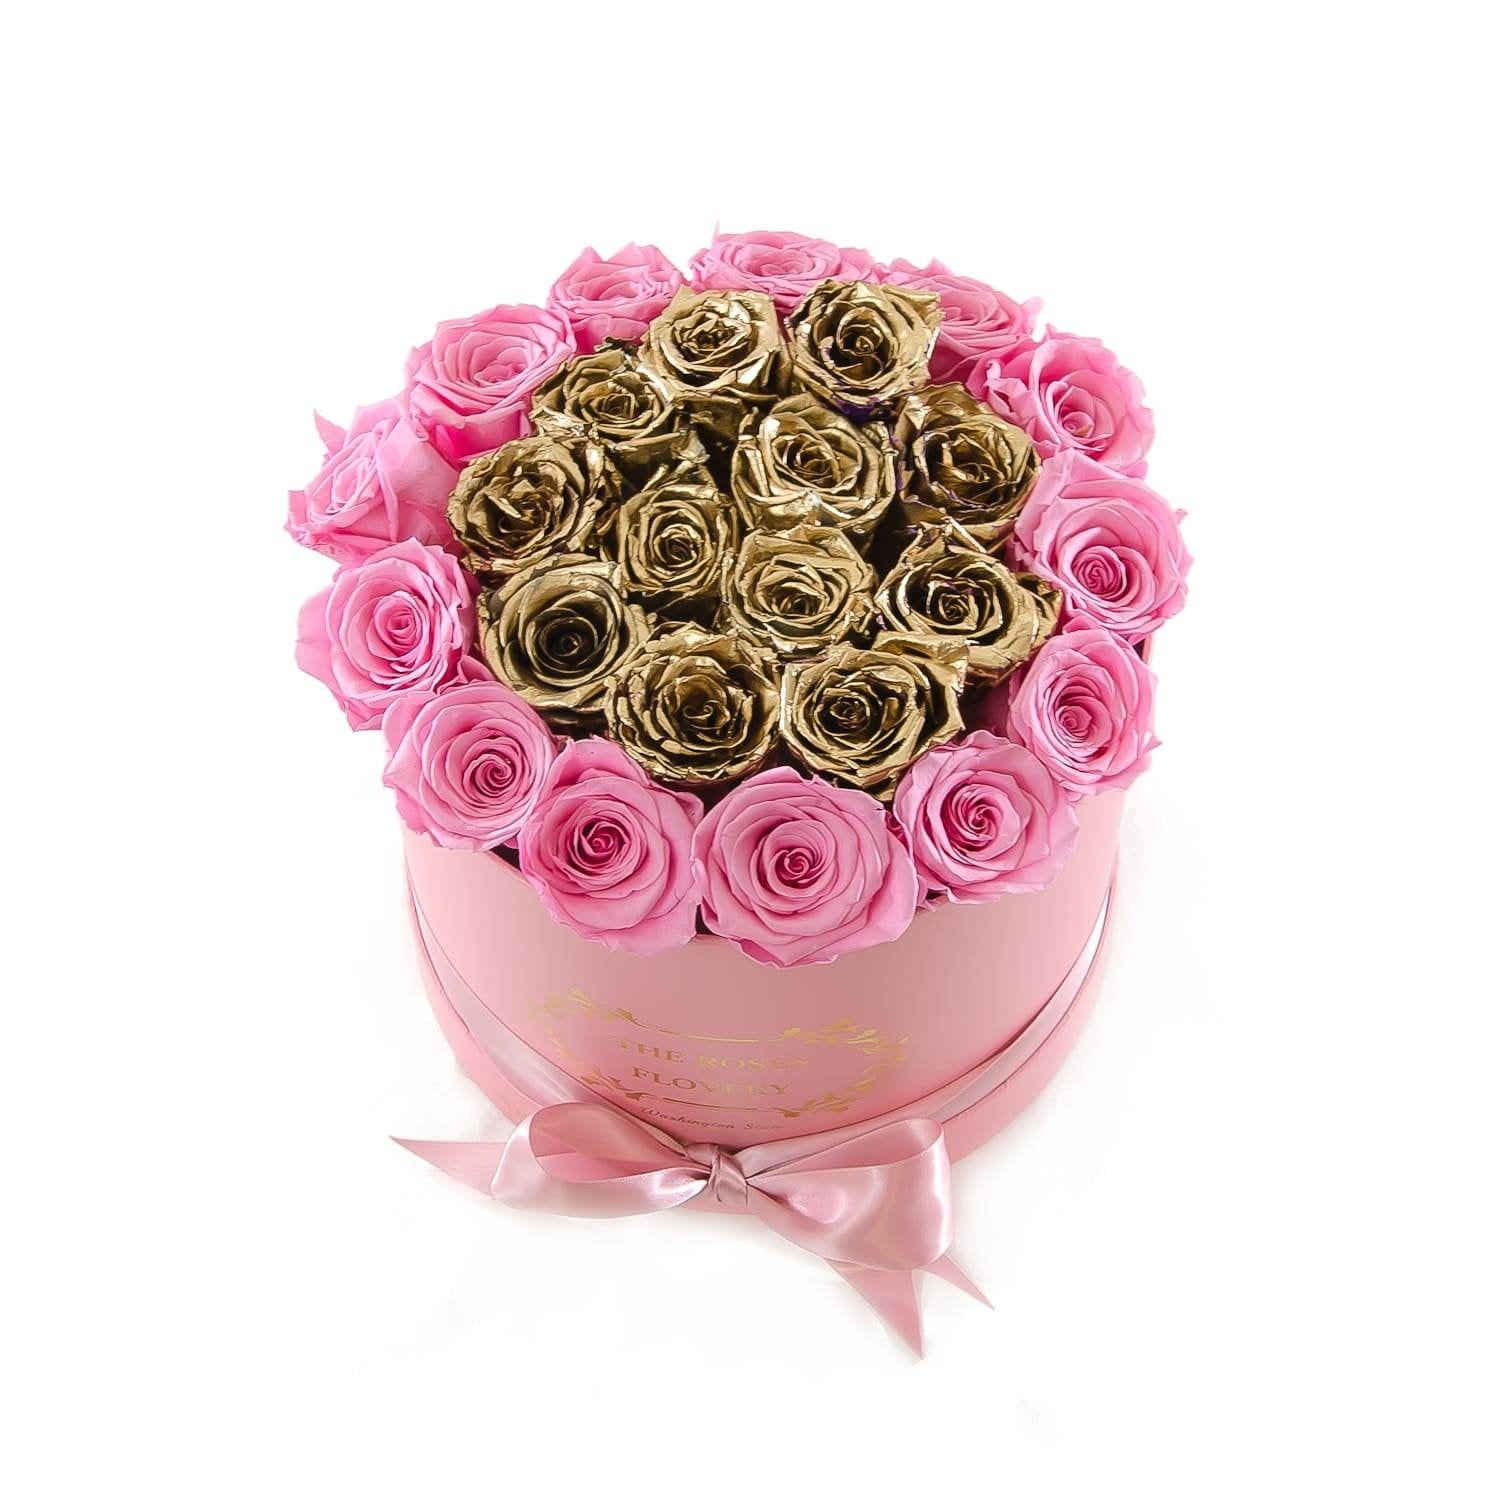 Medium Round Pink Box Pink Gold Roses - Flovery